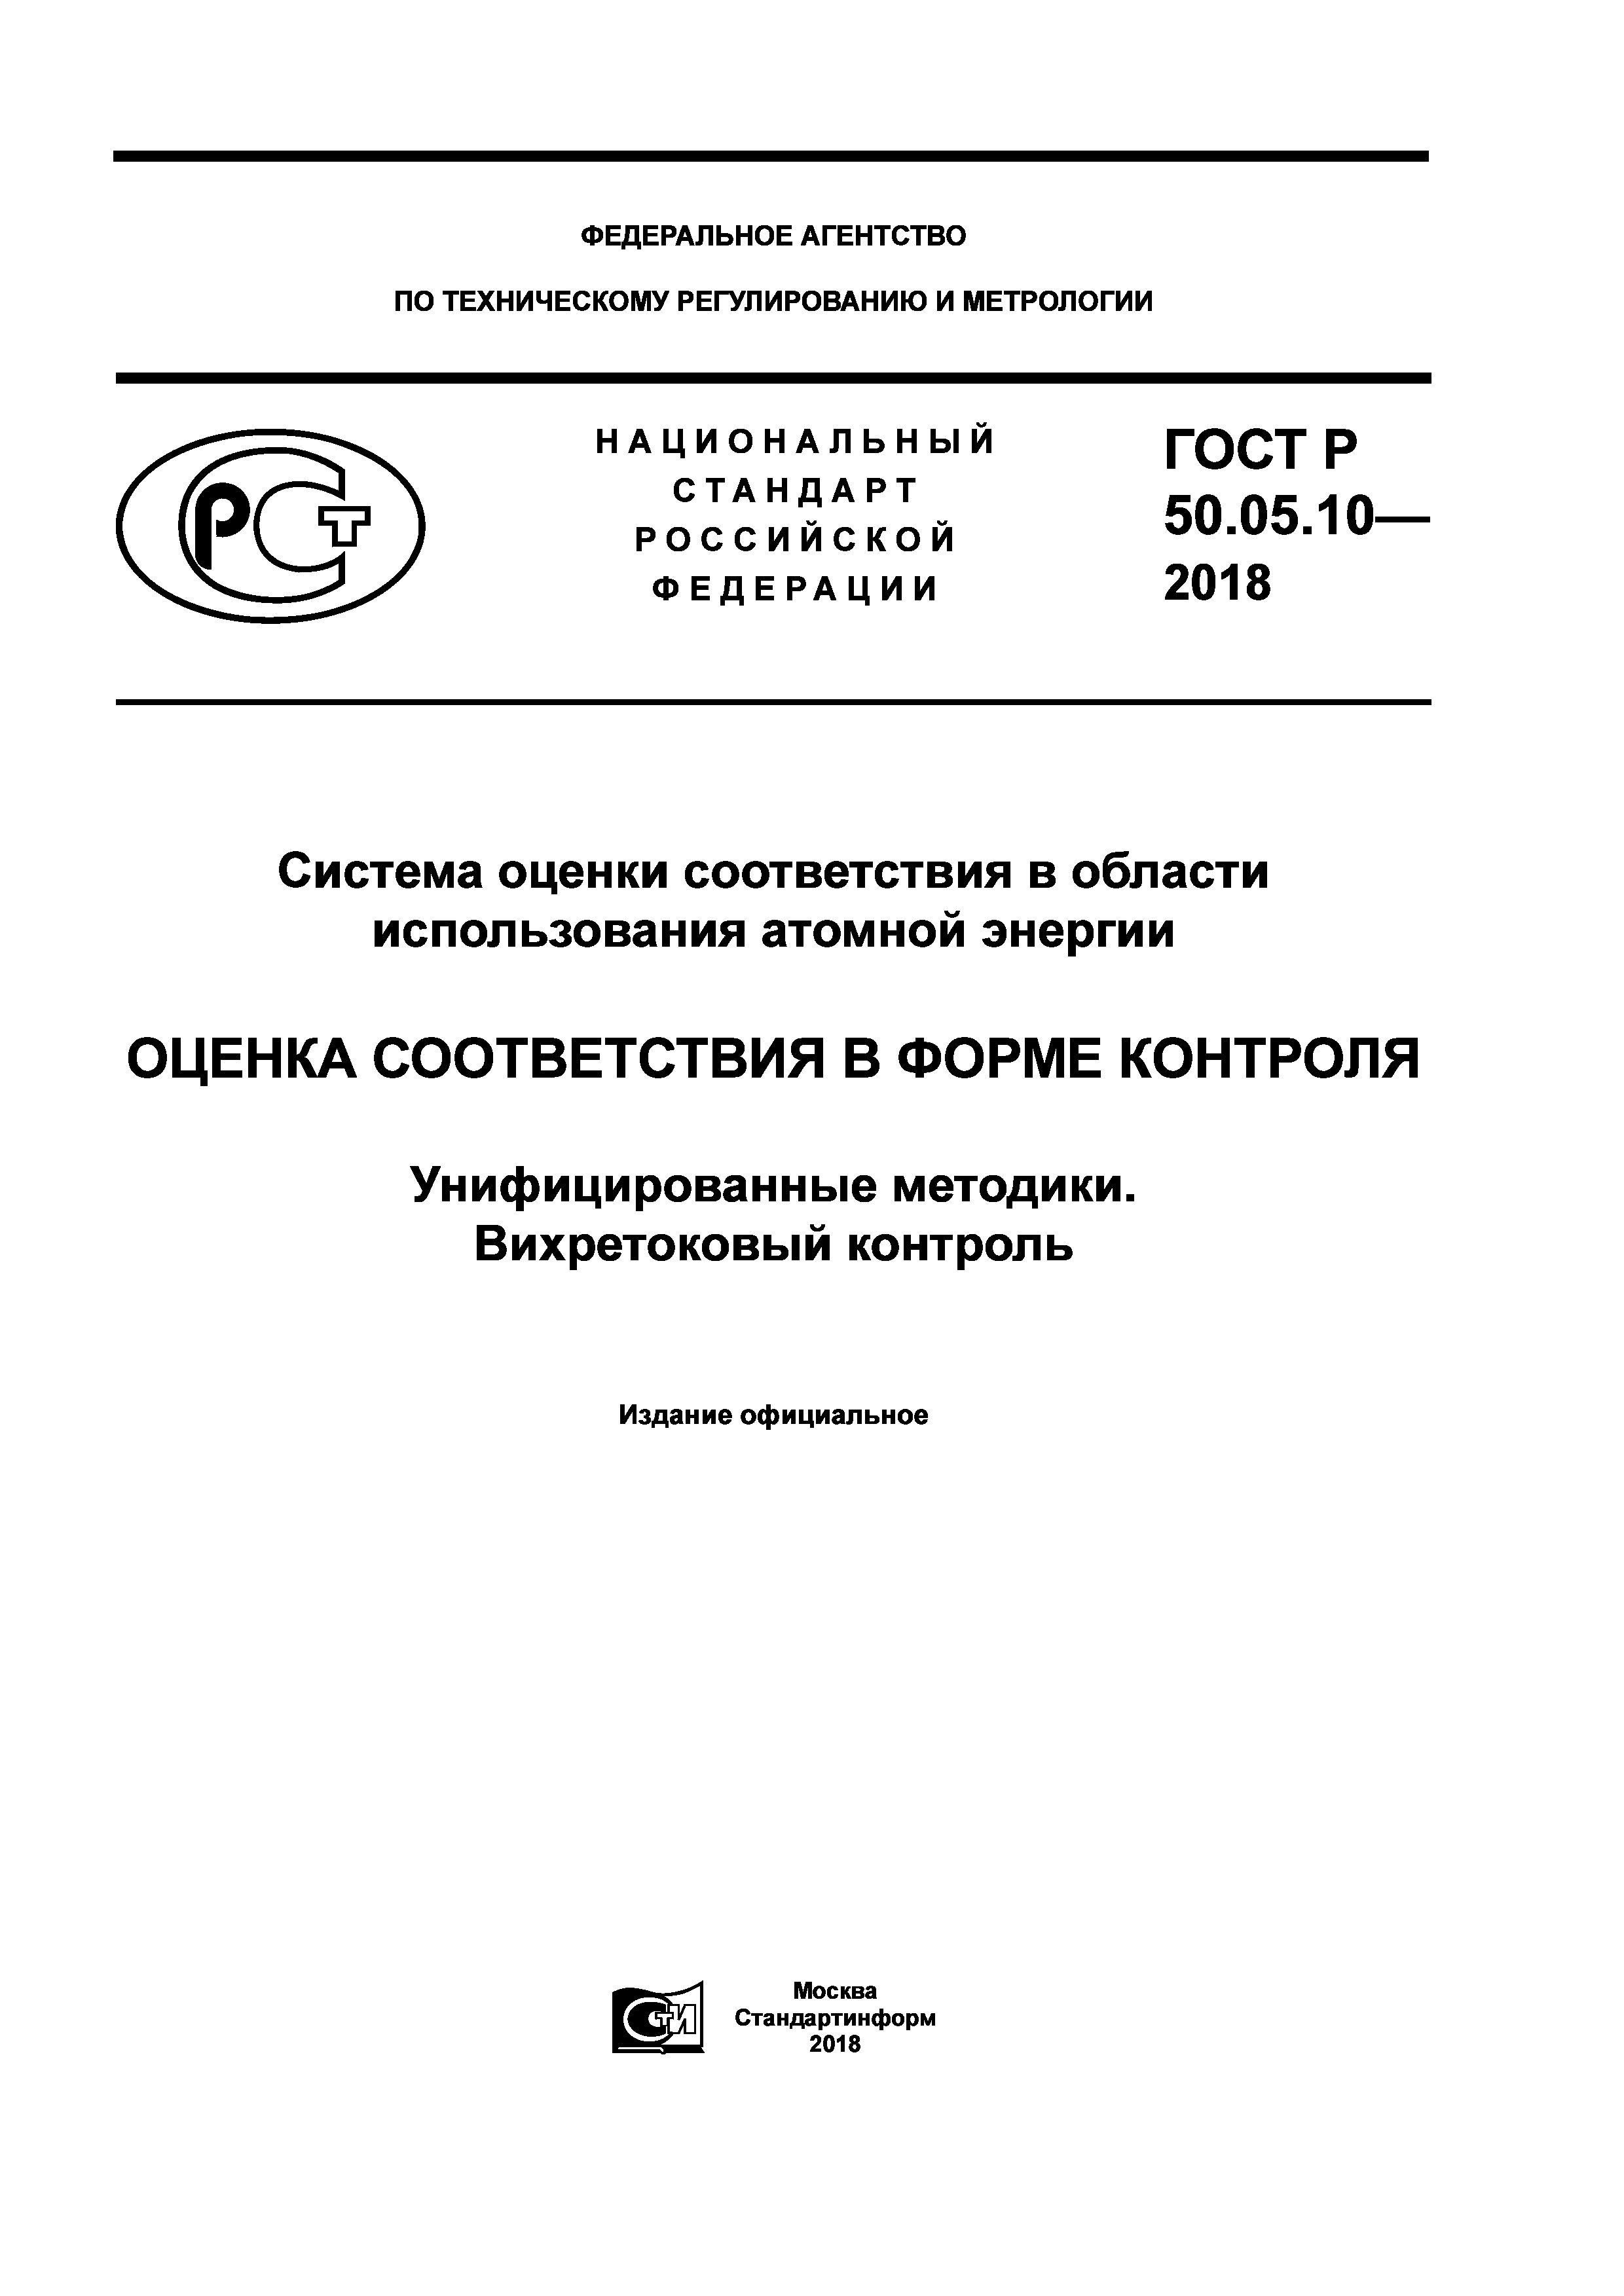 ГОСТ Р 50.05.10-2018